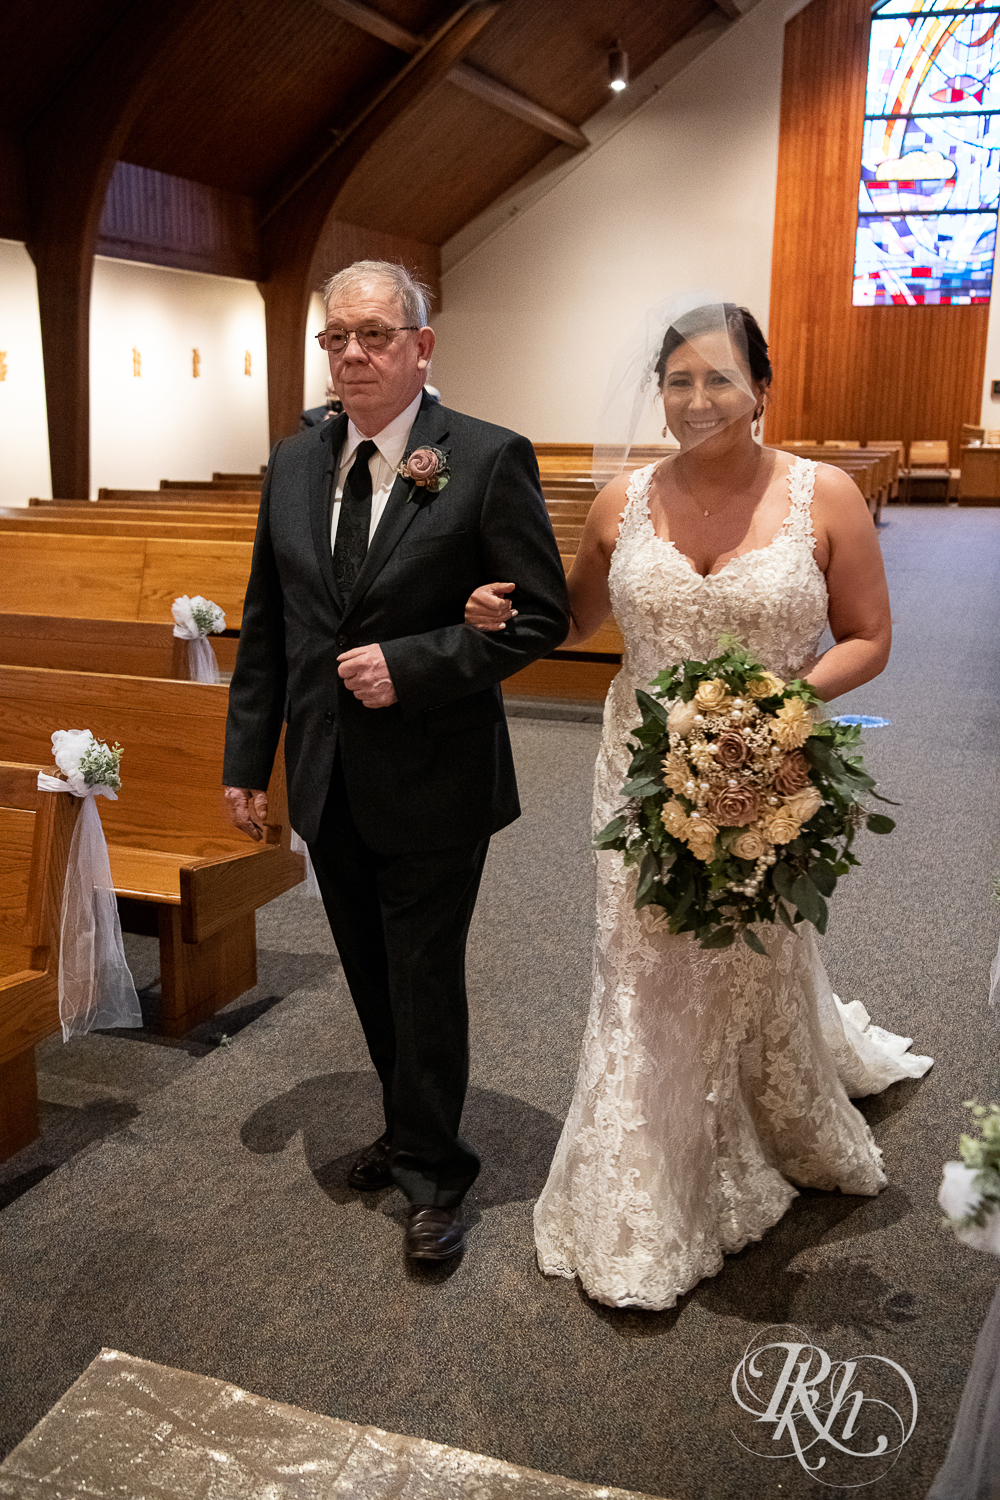 Bride walks down the aisle at a church wedding ceremony in Stillwater, Minnesota.